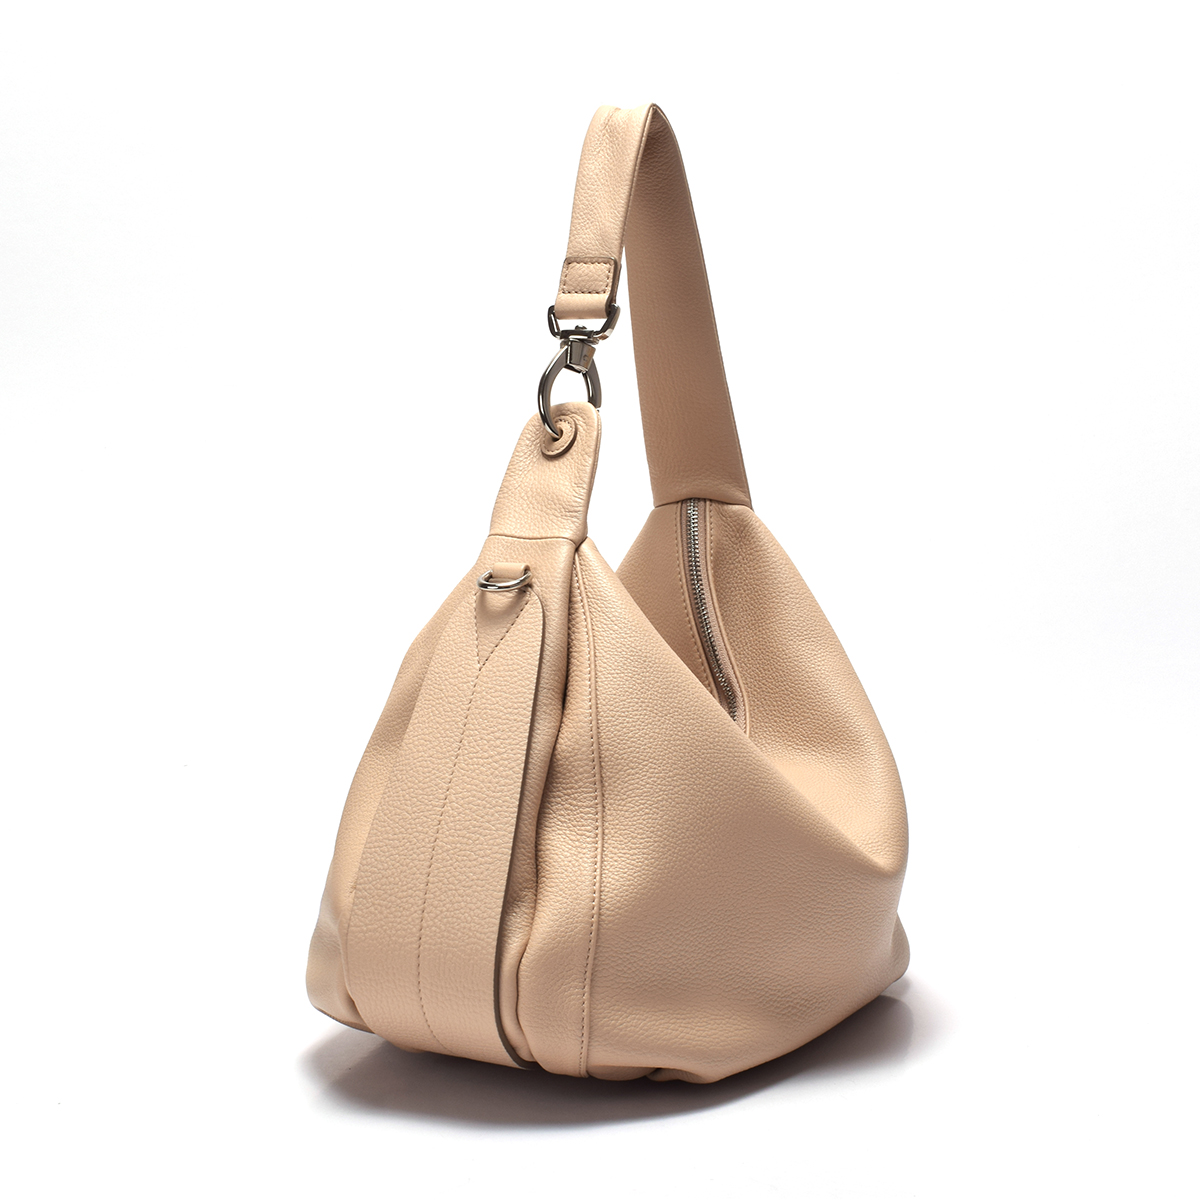 Sanlly custom handbags for business for fashion-2